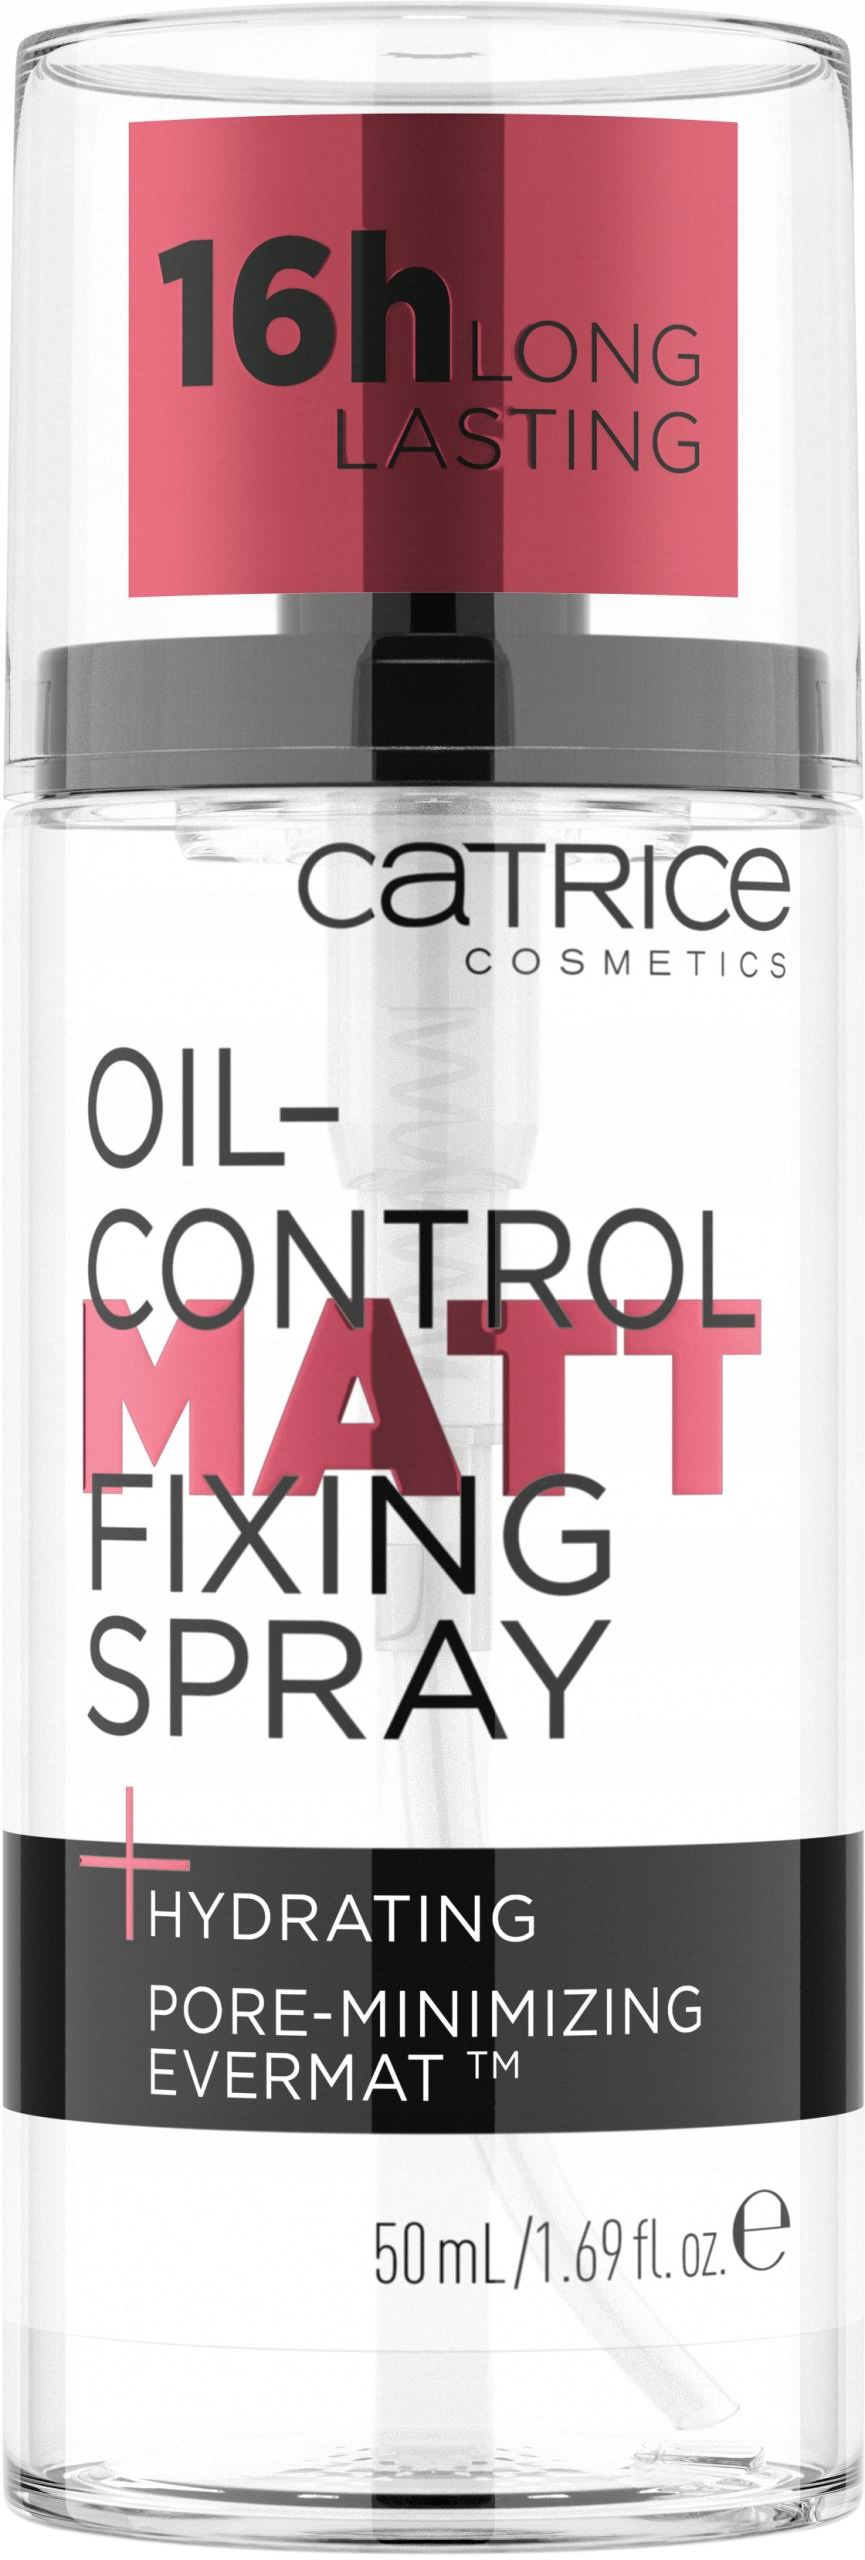 Catrice Matt Oil-control Fixing Spray 50ml